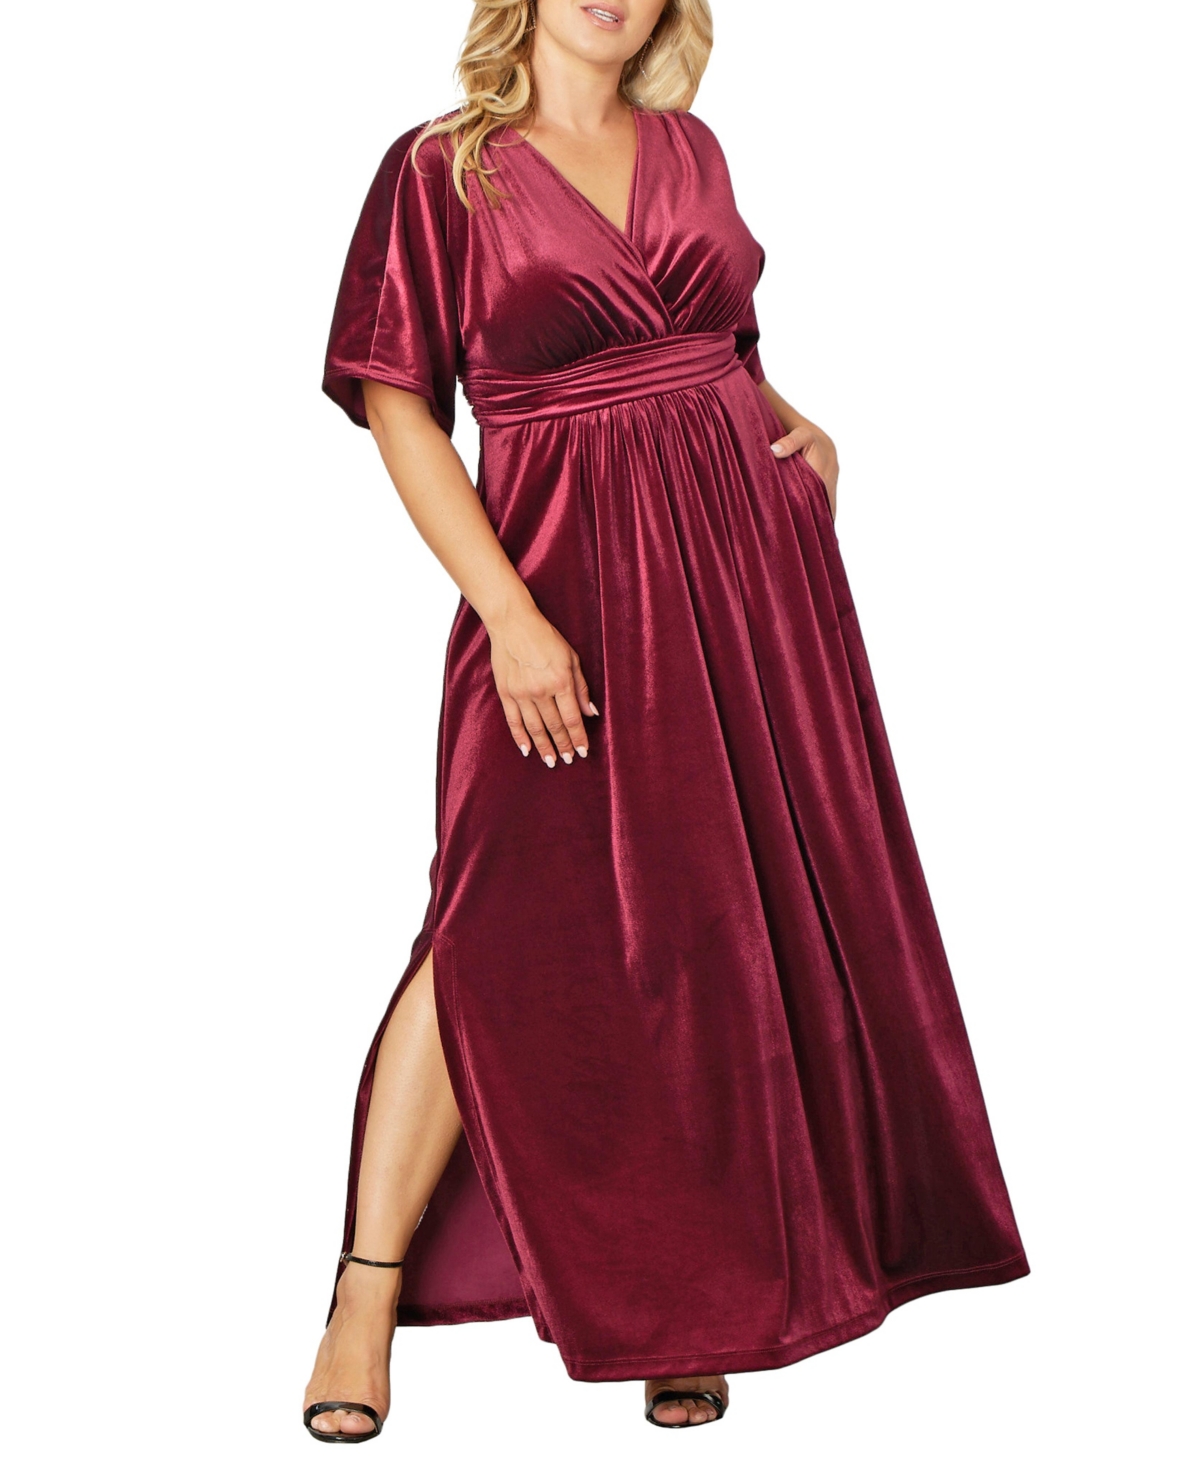 Women's Plus Size Verona Velvet Evening Gown - Pinot noir